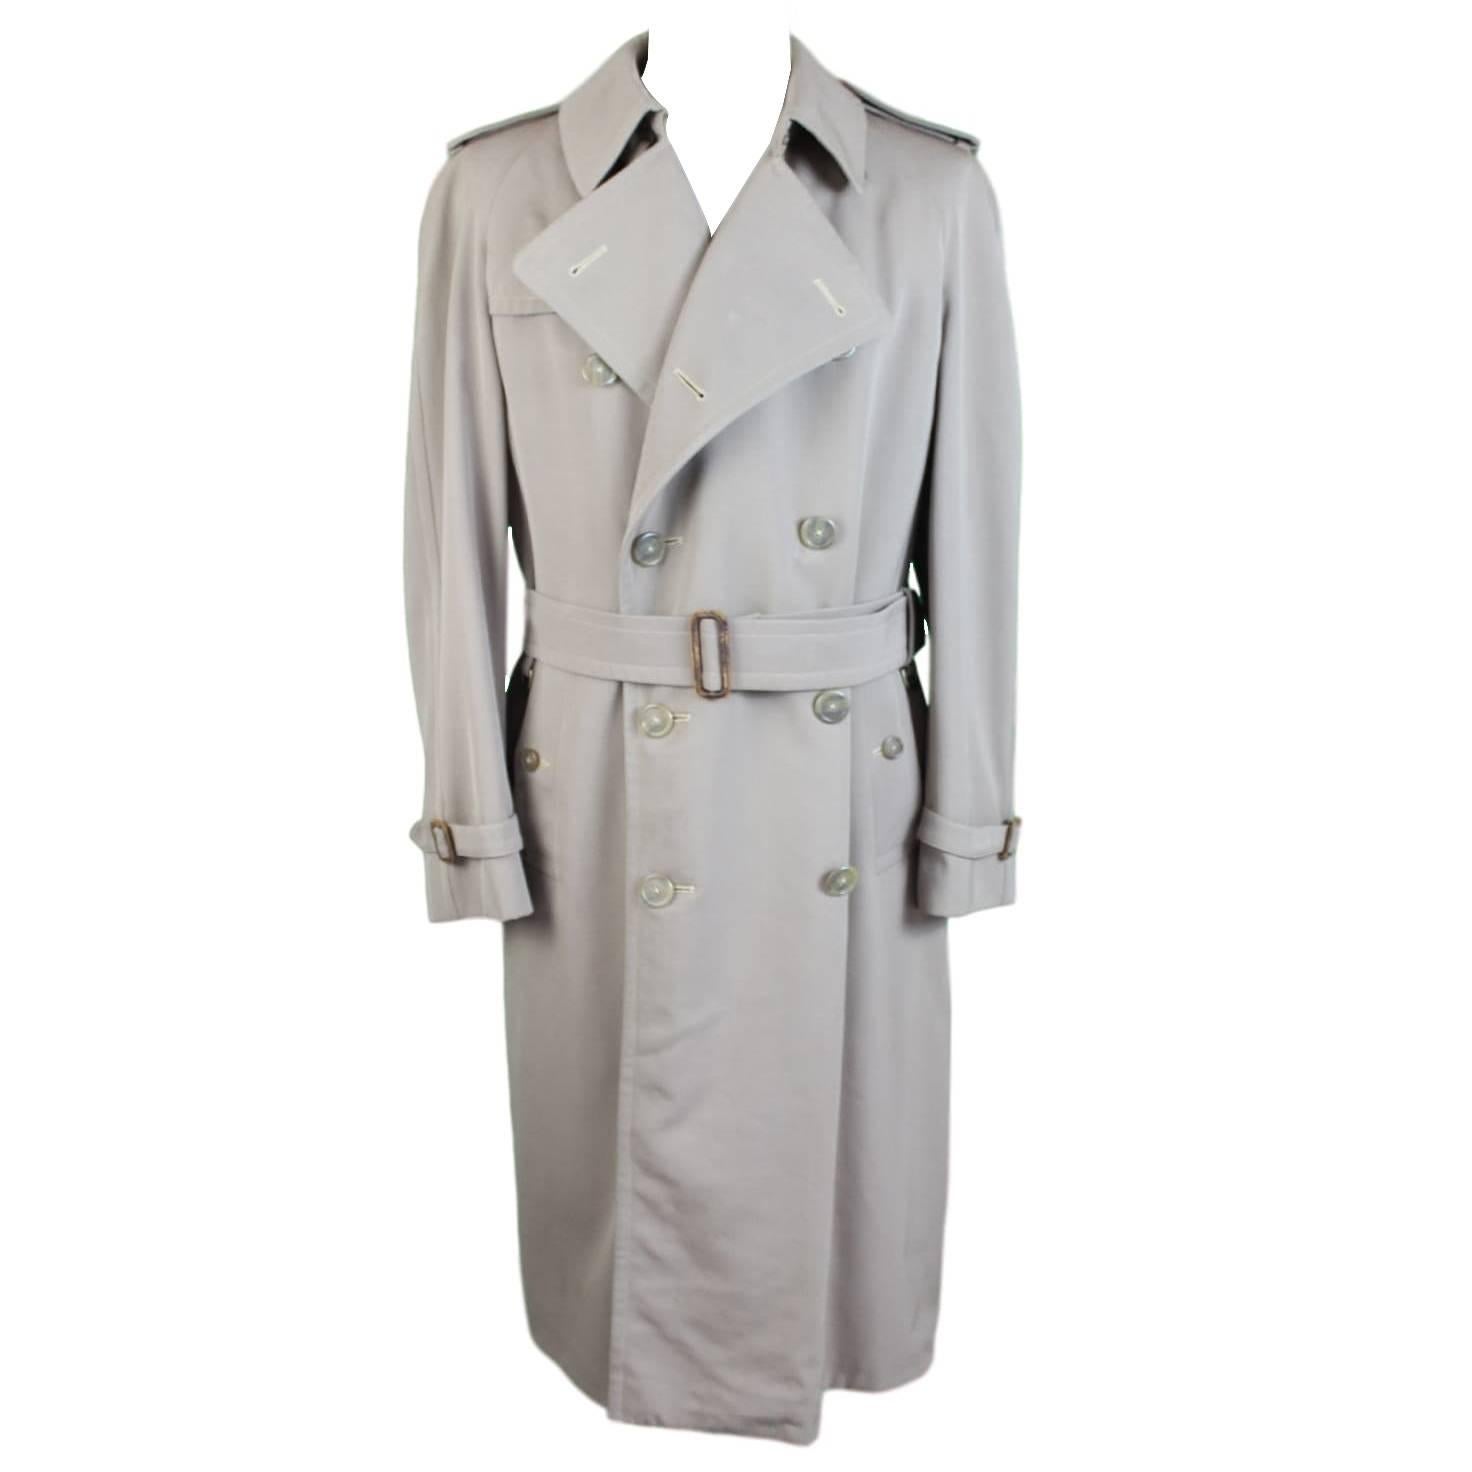 Burberry 1980s trench coat men's beige size 38 reg raincoat long vintage